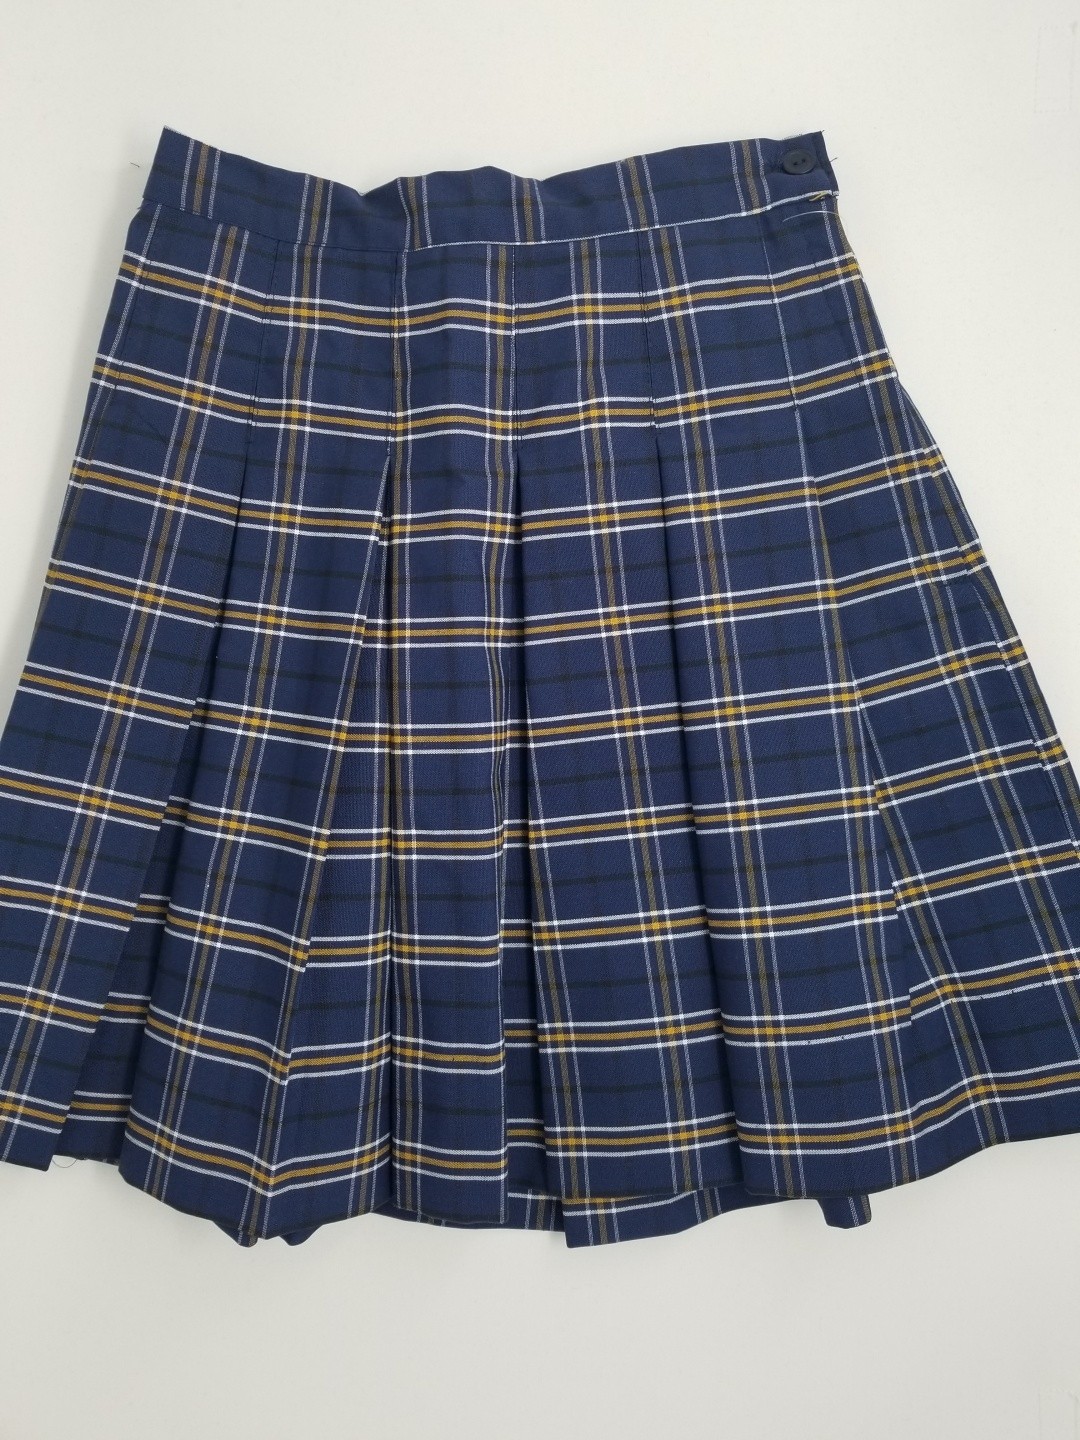 Stitch Down Pleat Skirt- Style 11-Plaid 28